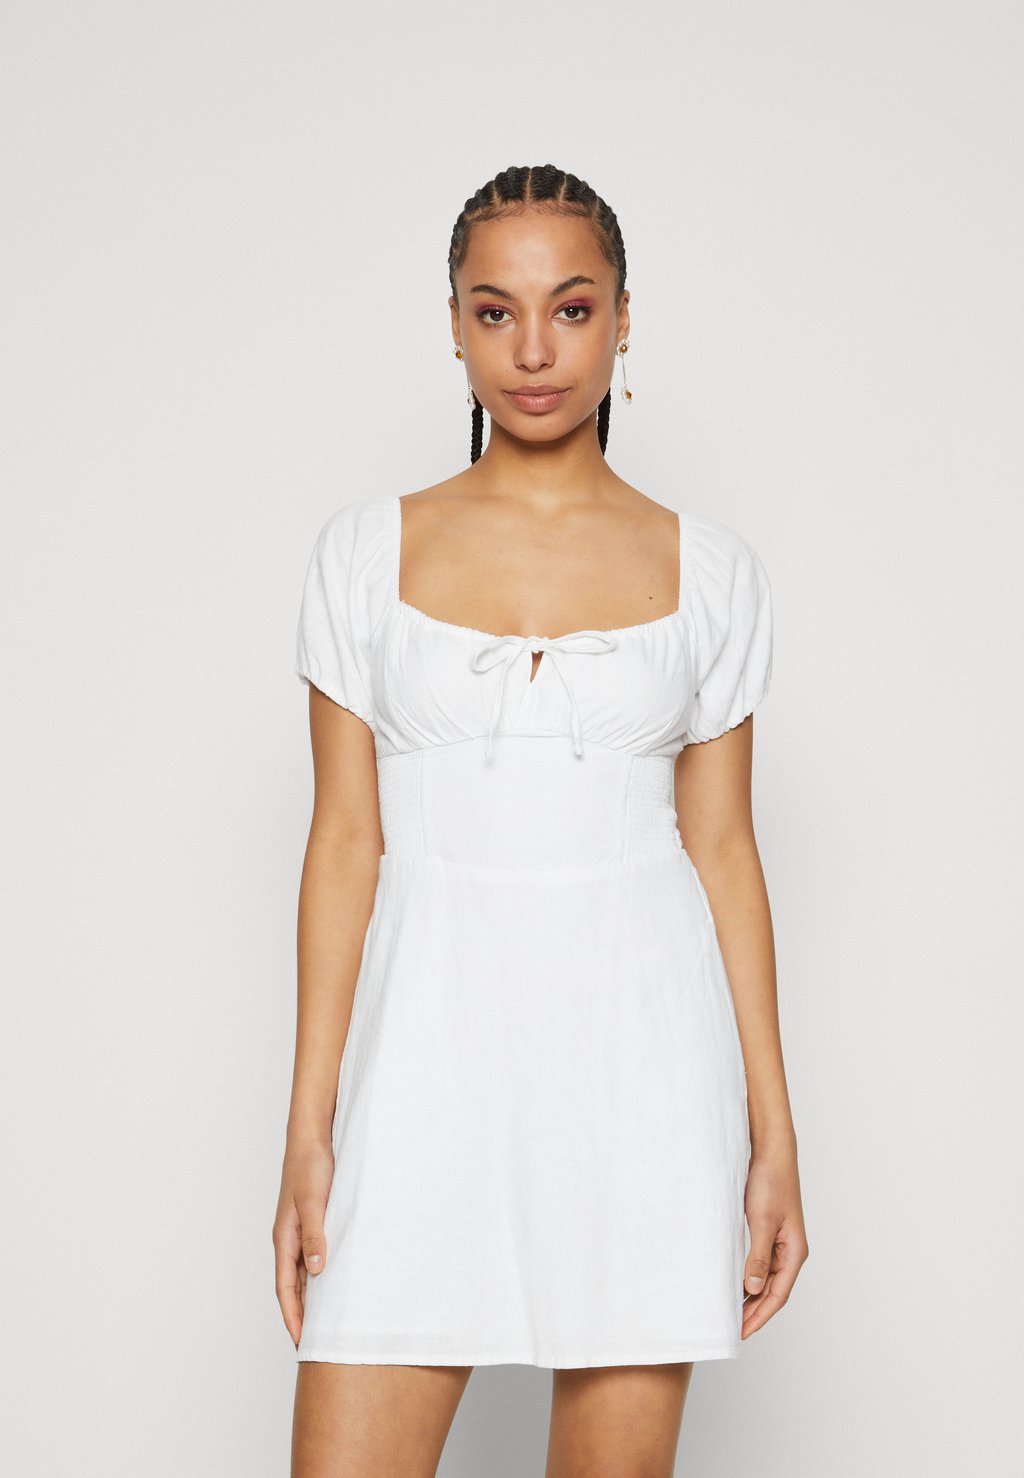 Дневное платье SOFIA DRESS Hollister Co., цвет bright white платье дневное bare saidie franchise skort dress hollister co темно синий